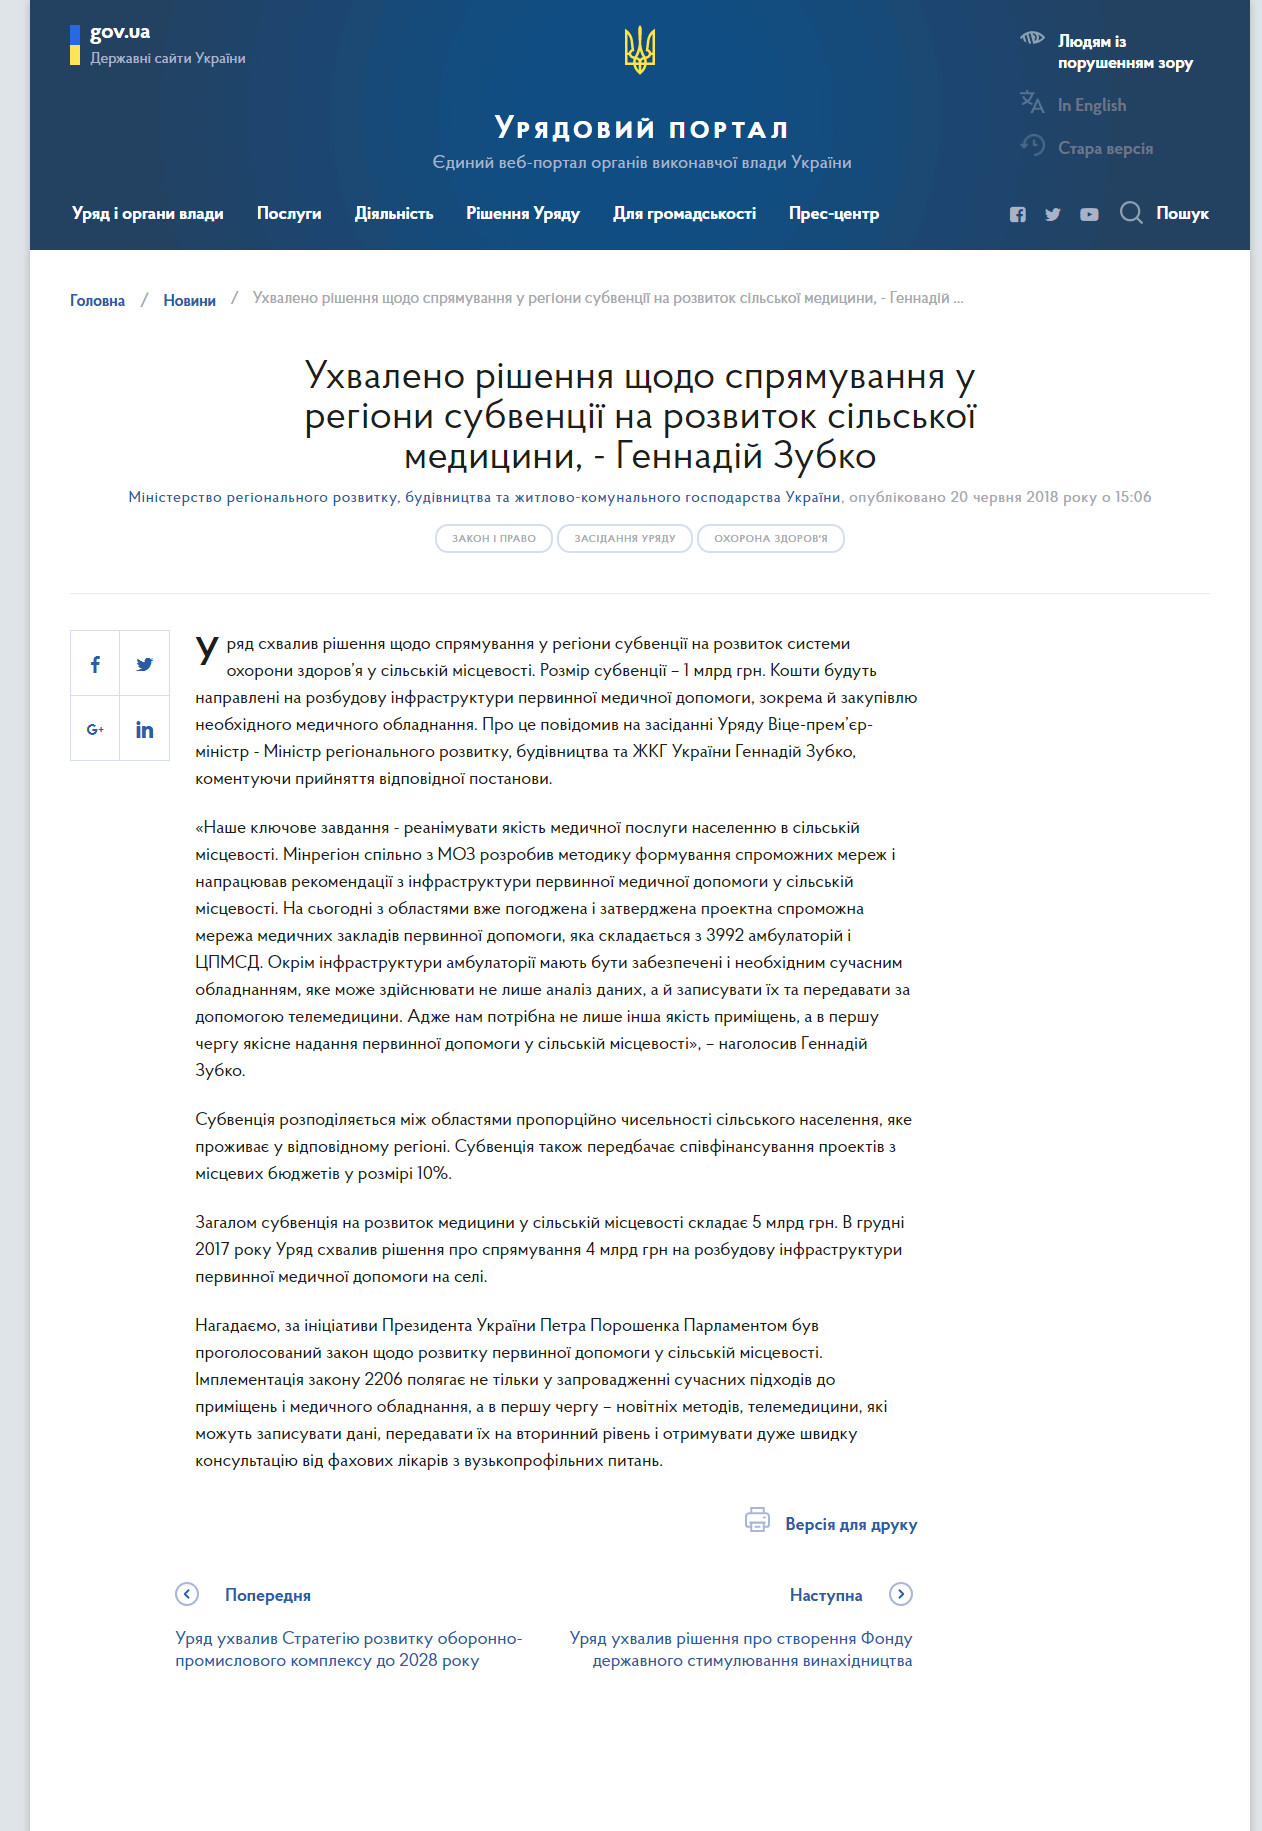 https://ua.interfax.com.ua/news/pharmacy/467638.html